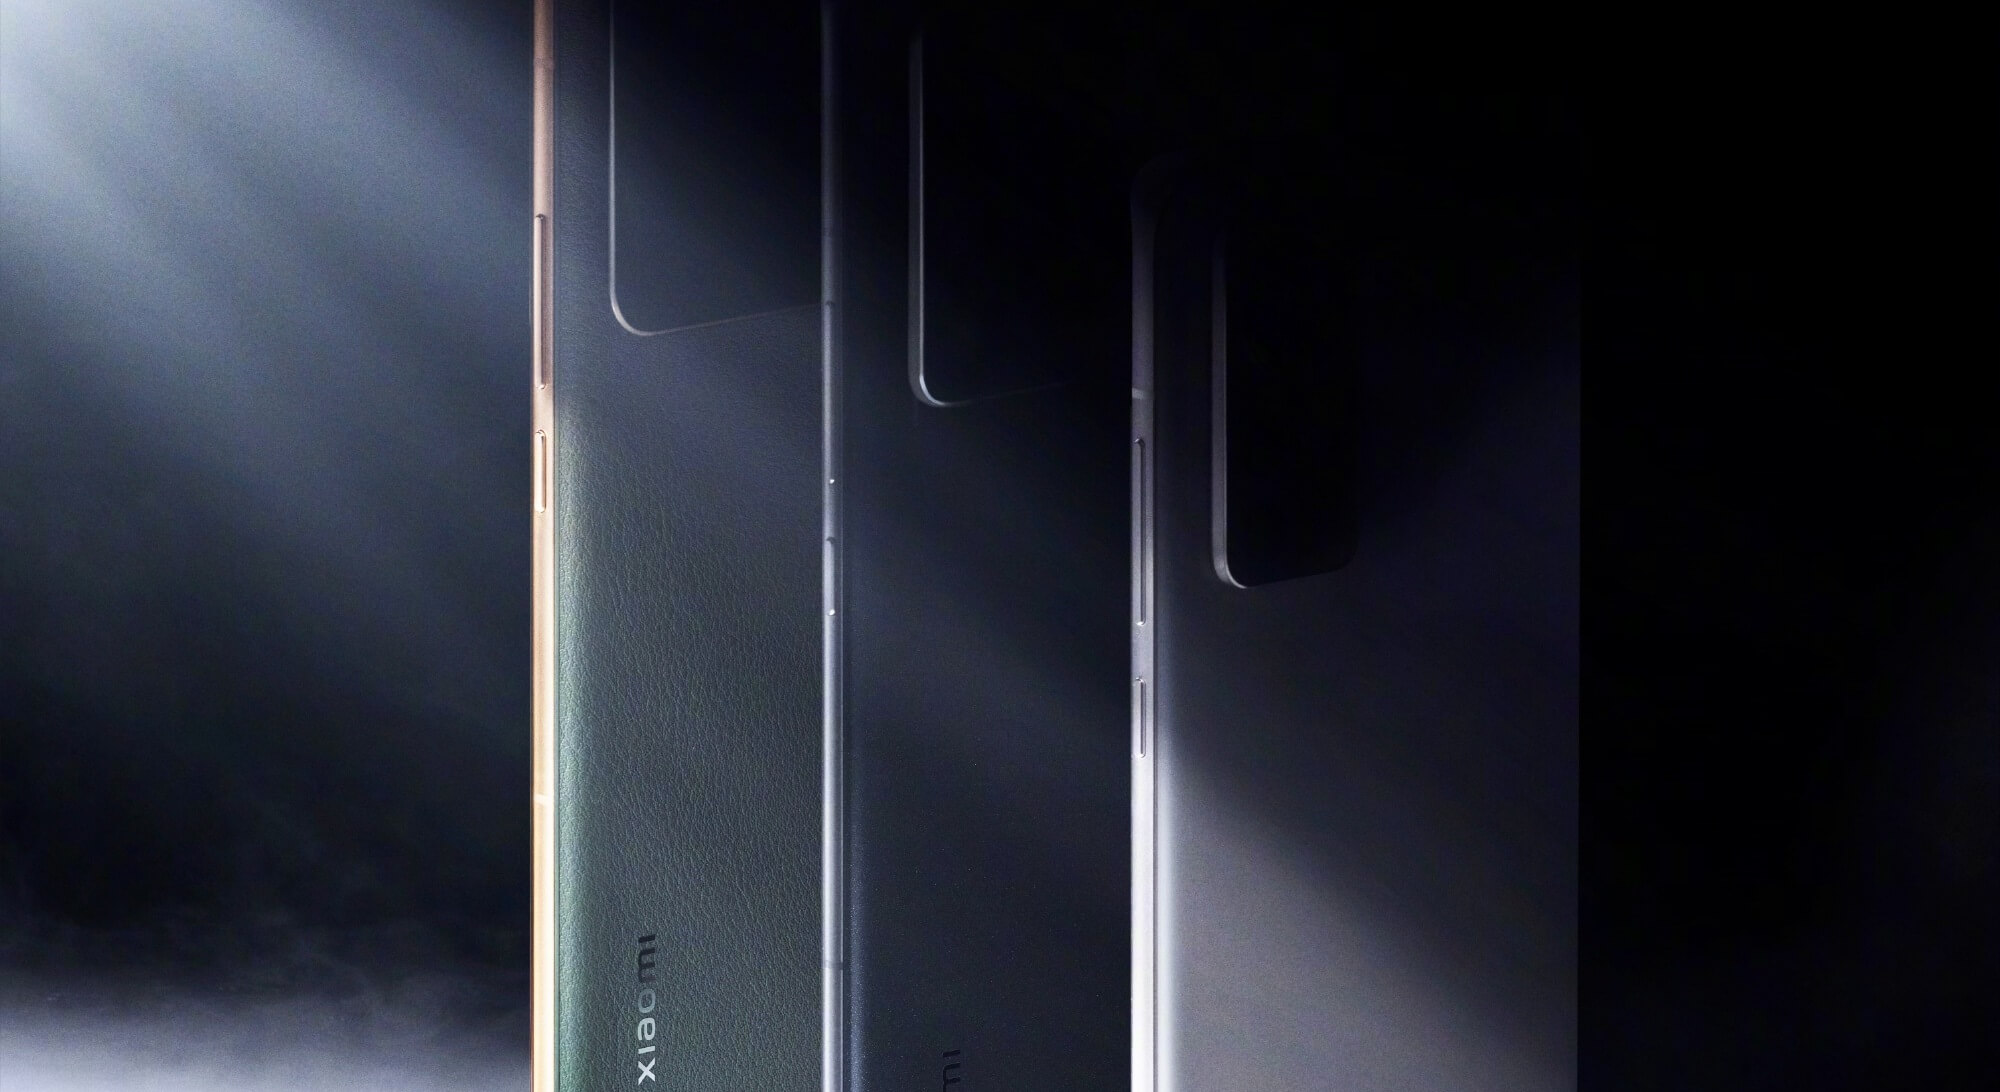 Xiaomi 12S, 12S Pro и 12S Ultra